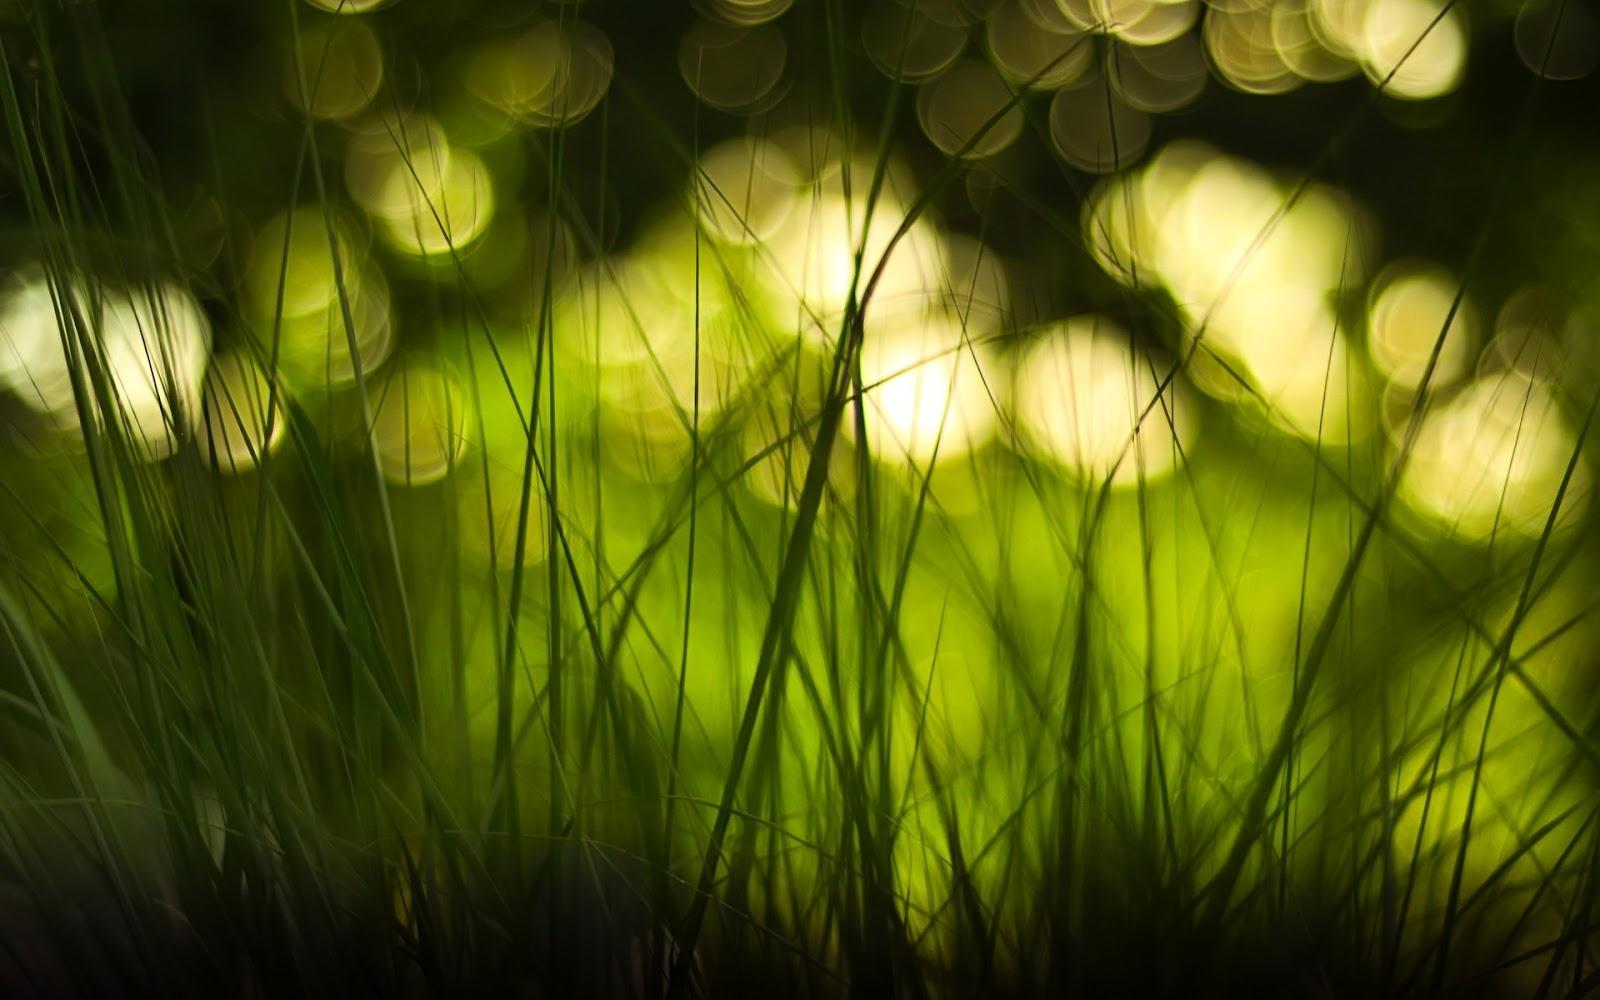 Grass and Blurred Bokeh Lights HD Nature Wallpaper. HD Nature